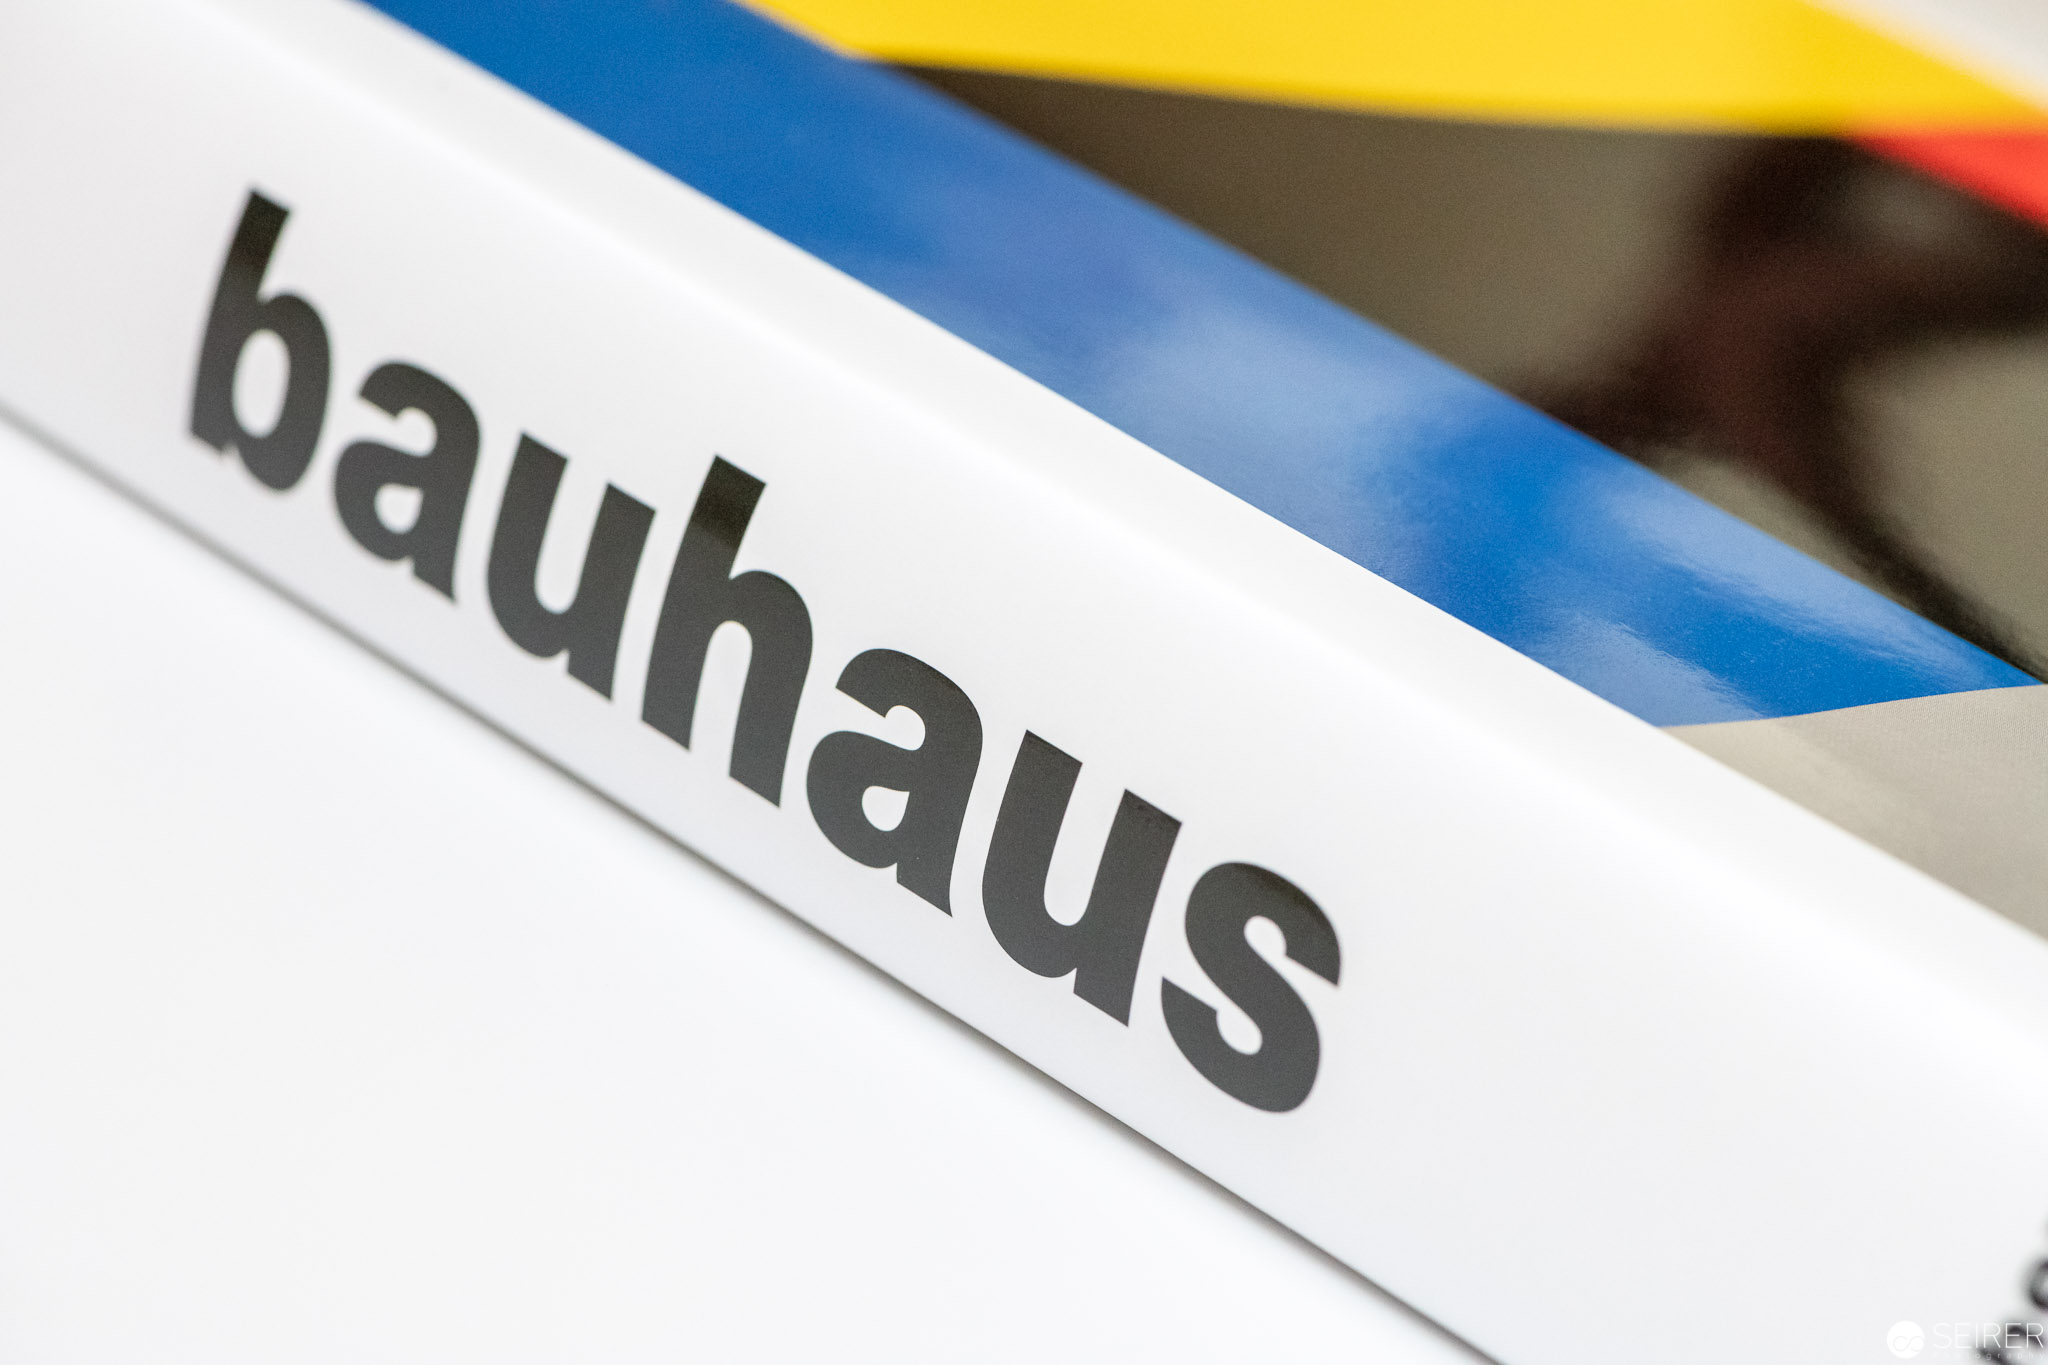 20190208 115516 Taschen Bauhaus New 6699